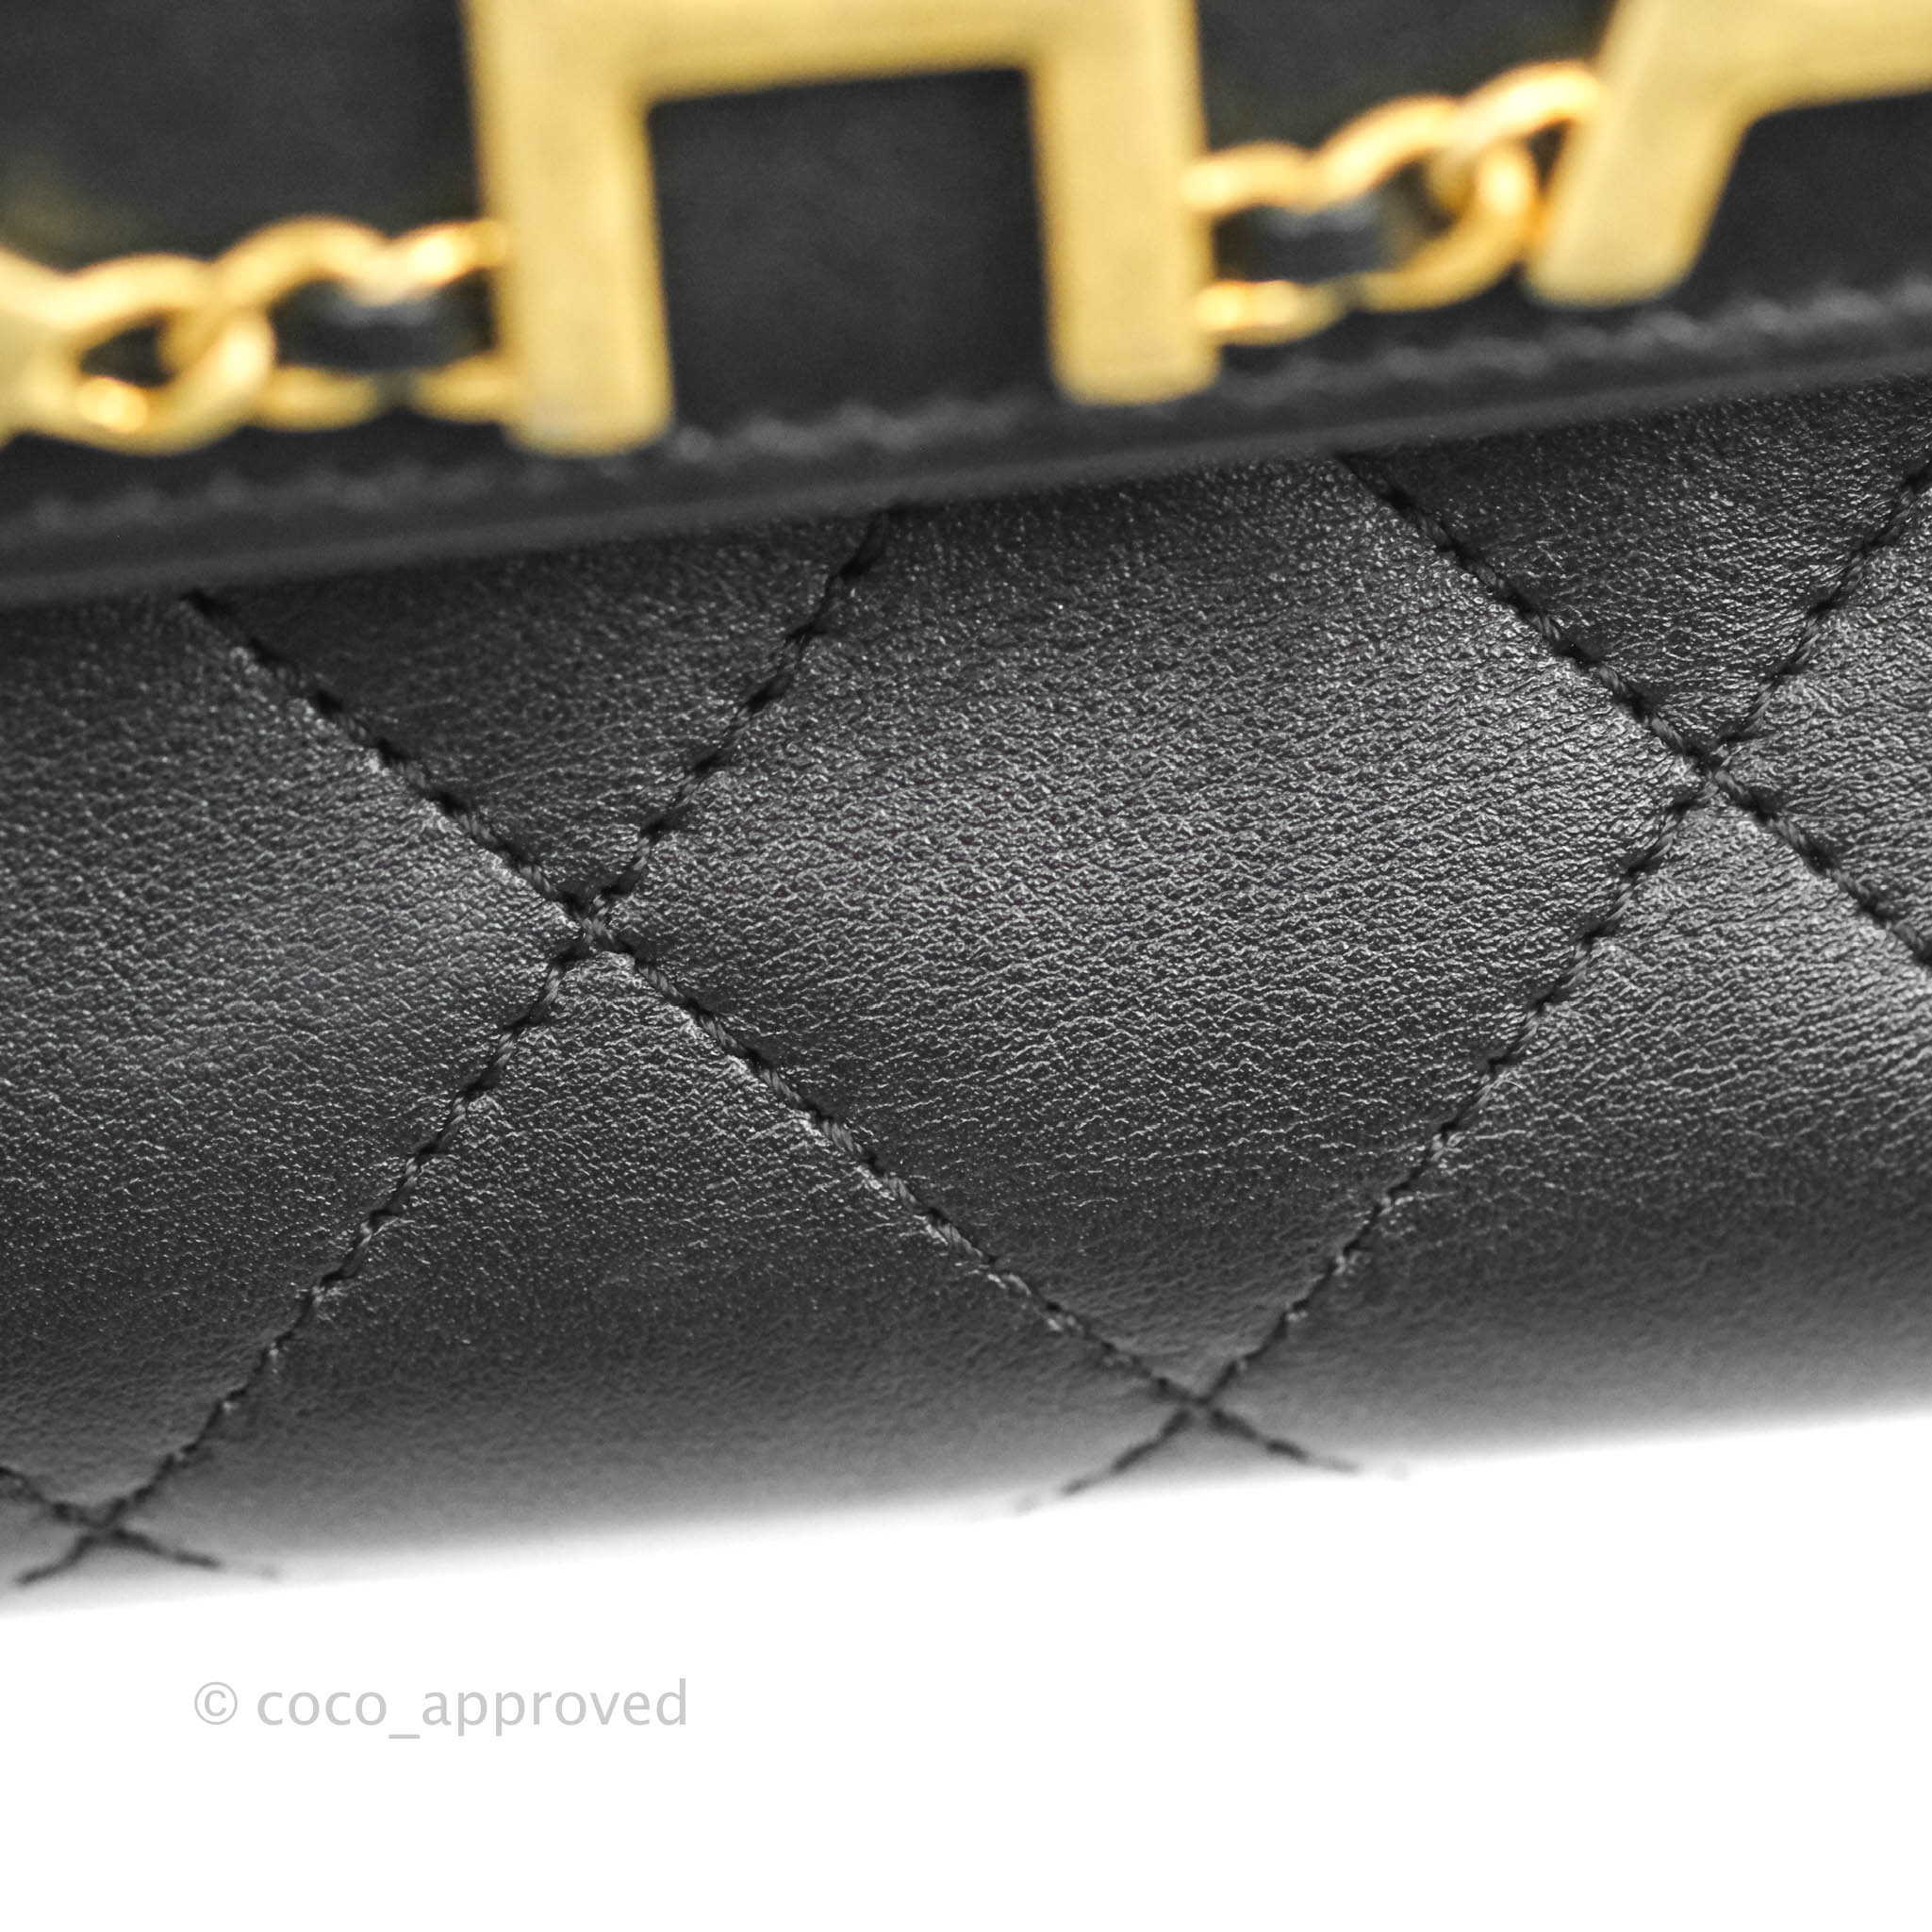 Chanel Logo Enchained Flap Bag Black Calfskin Gold Hardware – Coco